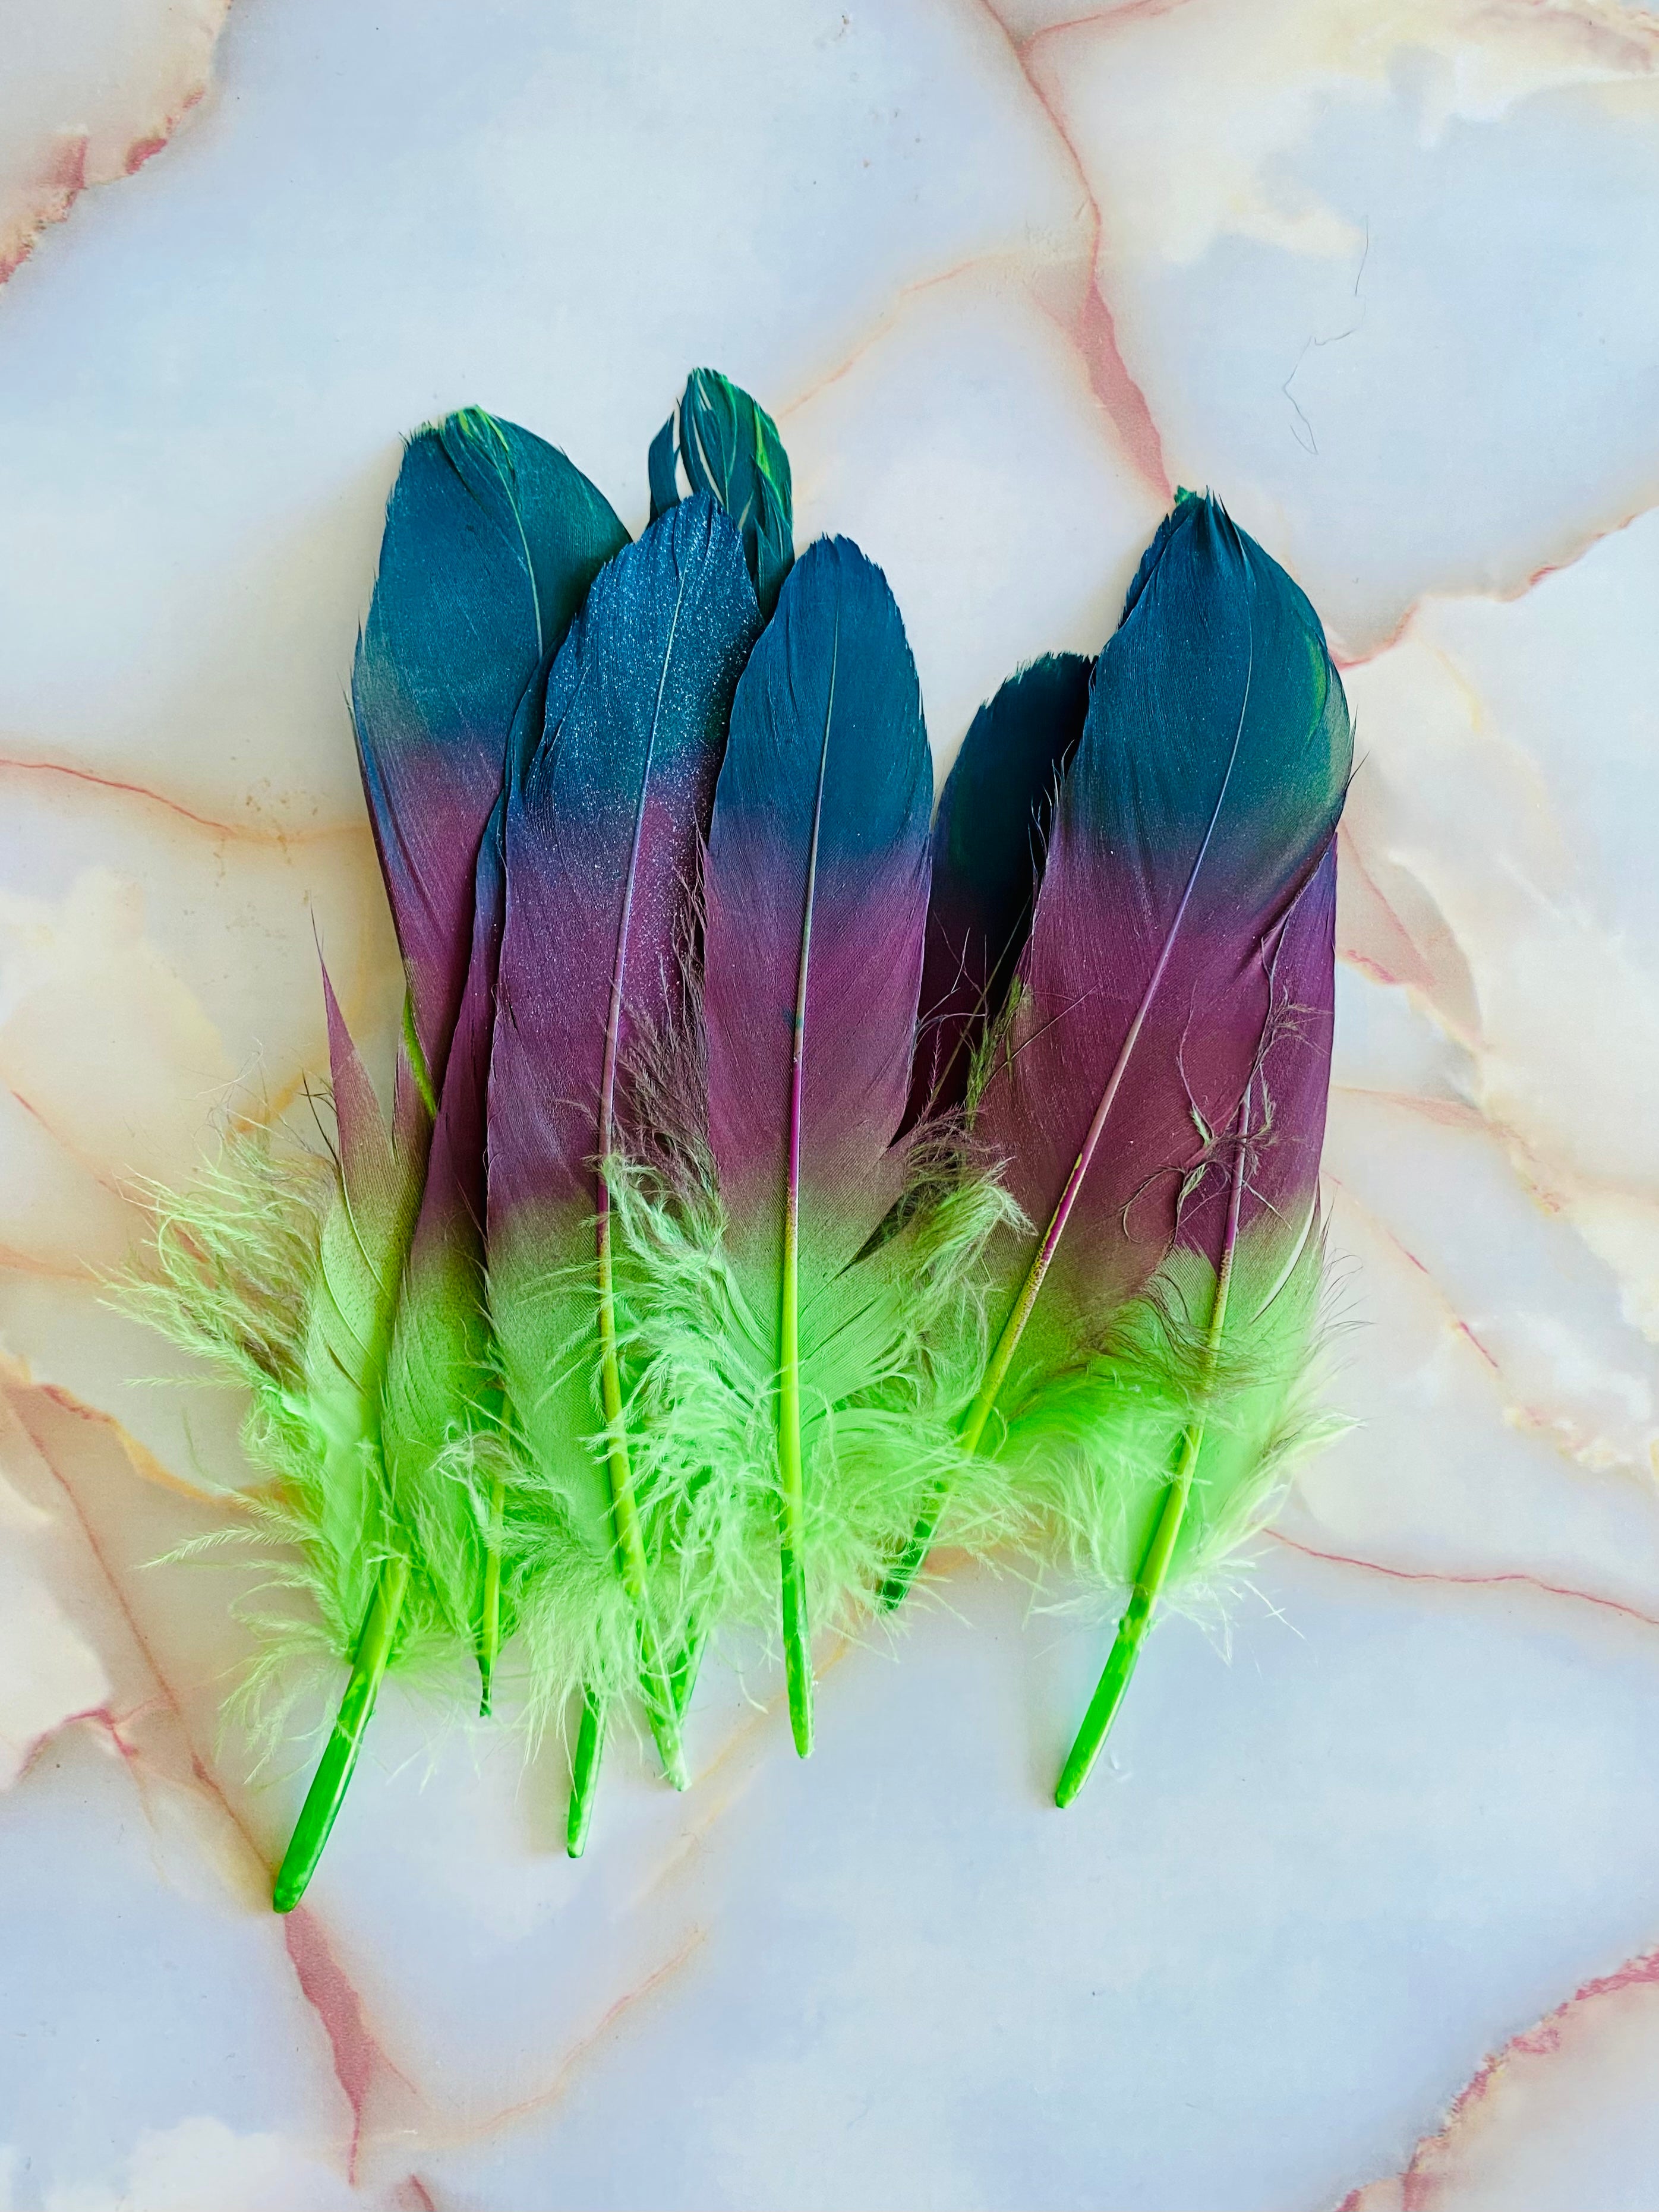 dark green feathers